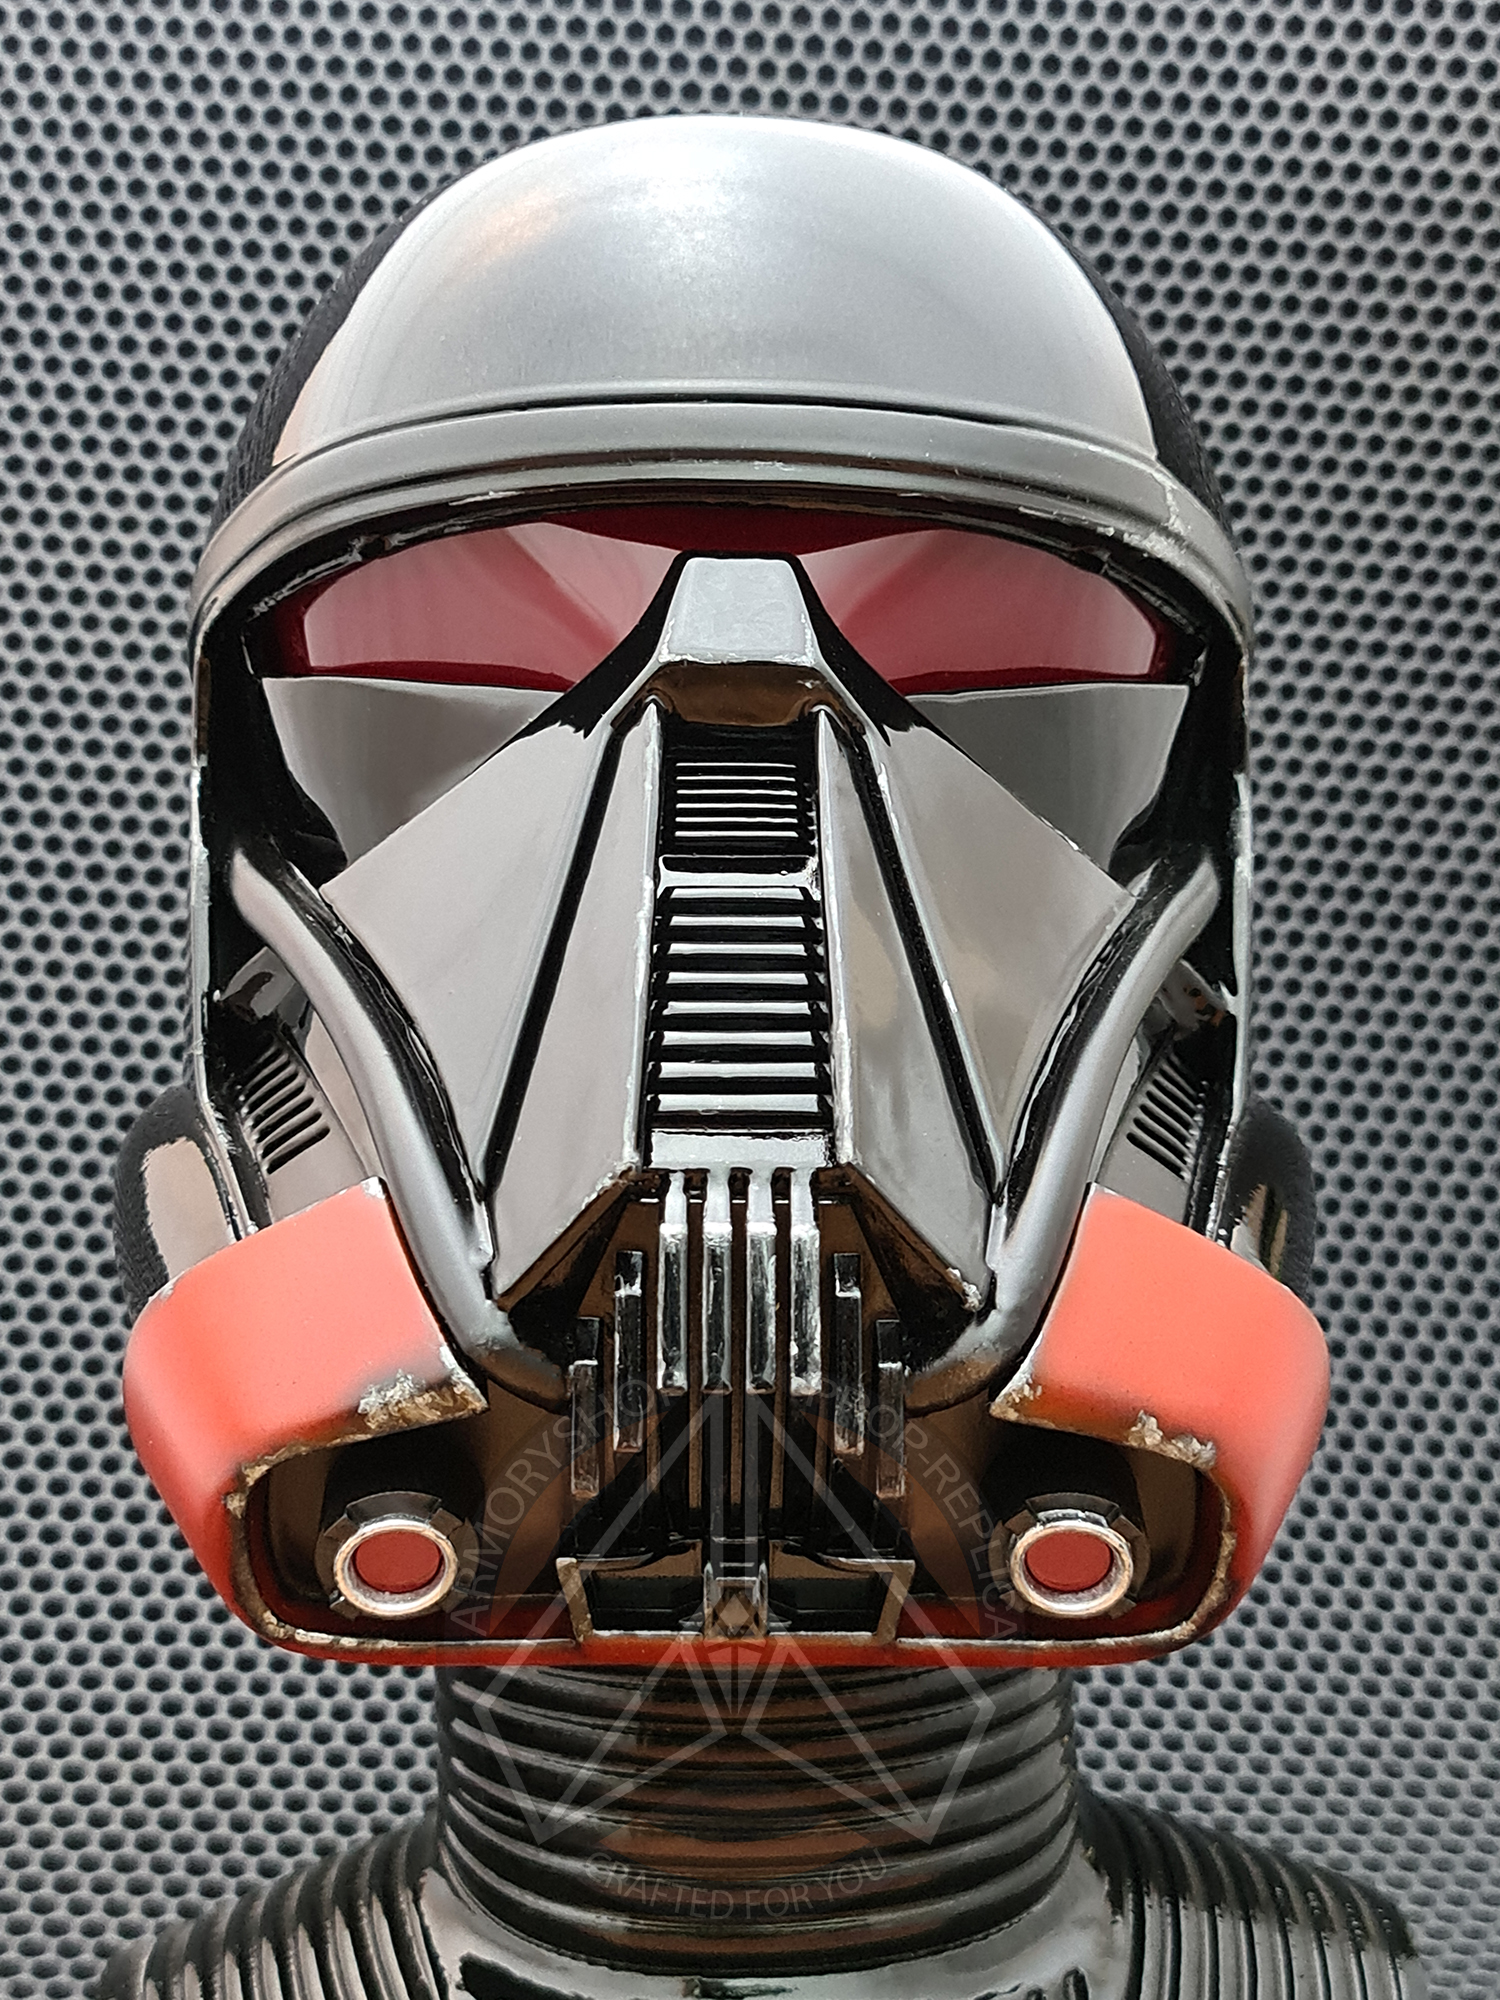 ASP DARK DeathTrooper helmet